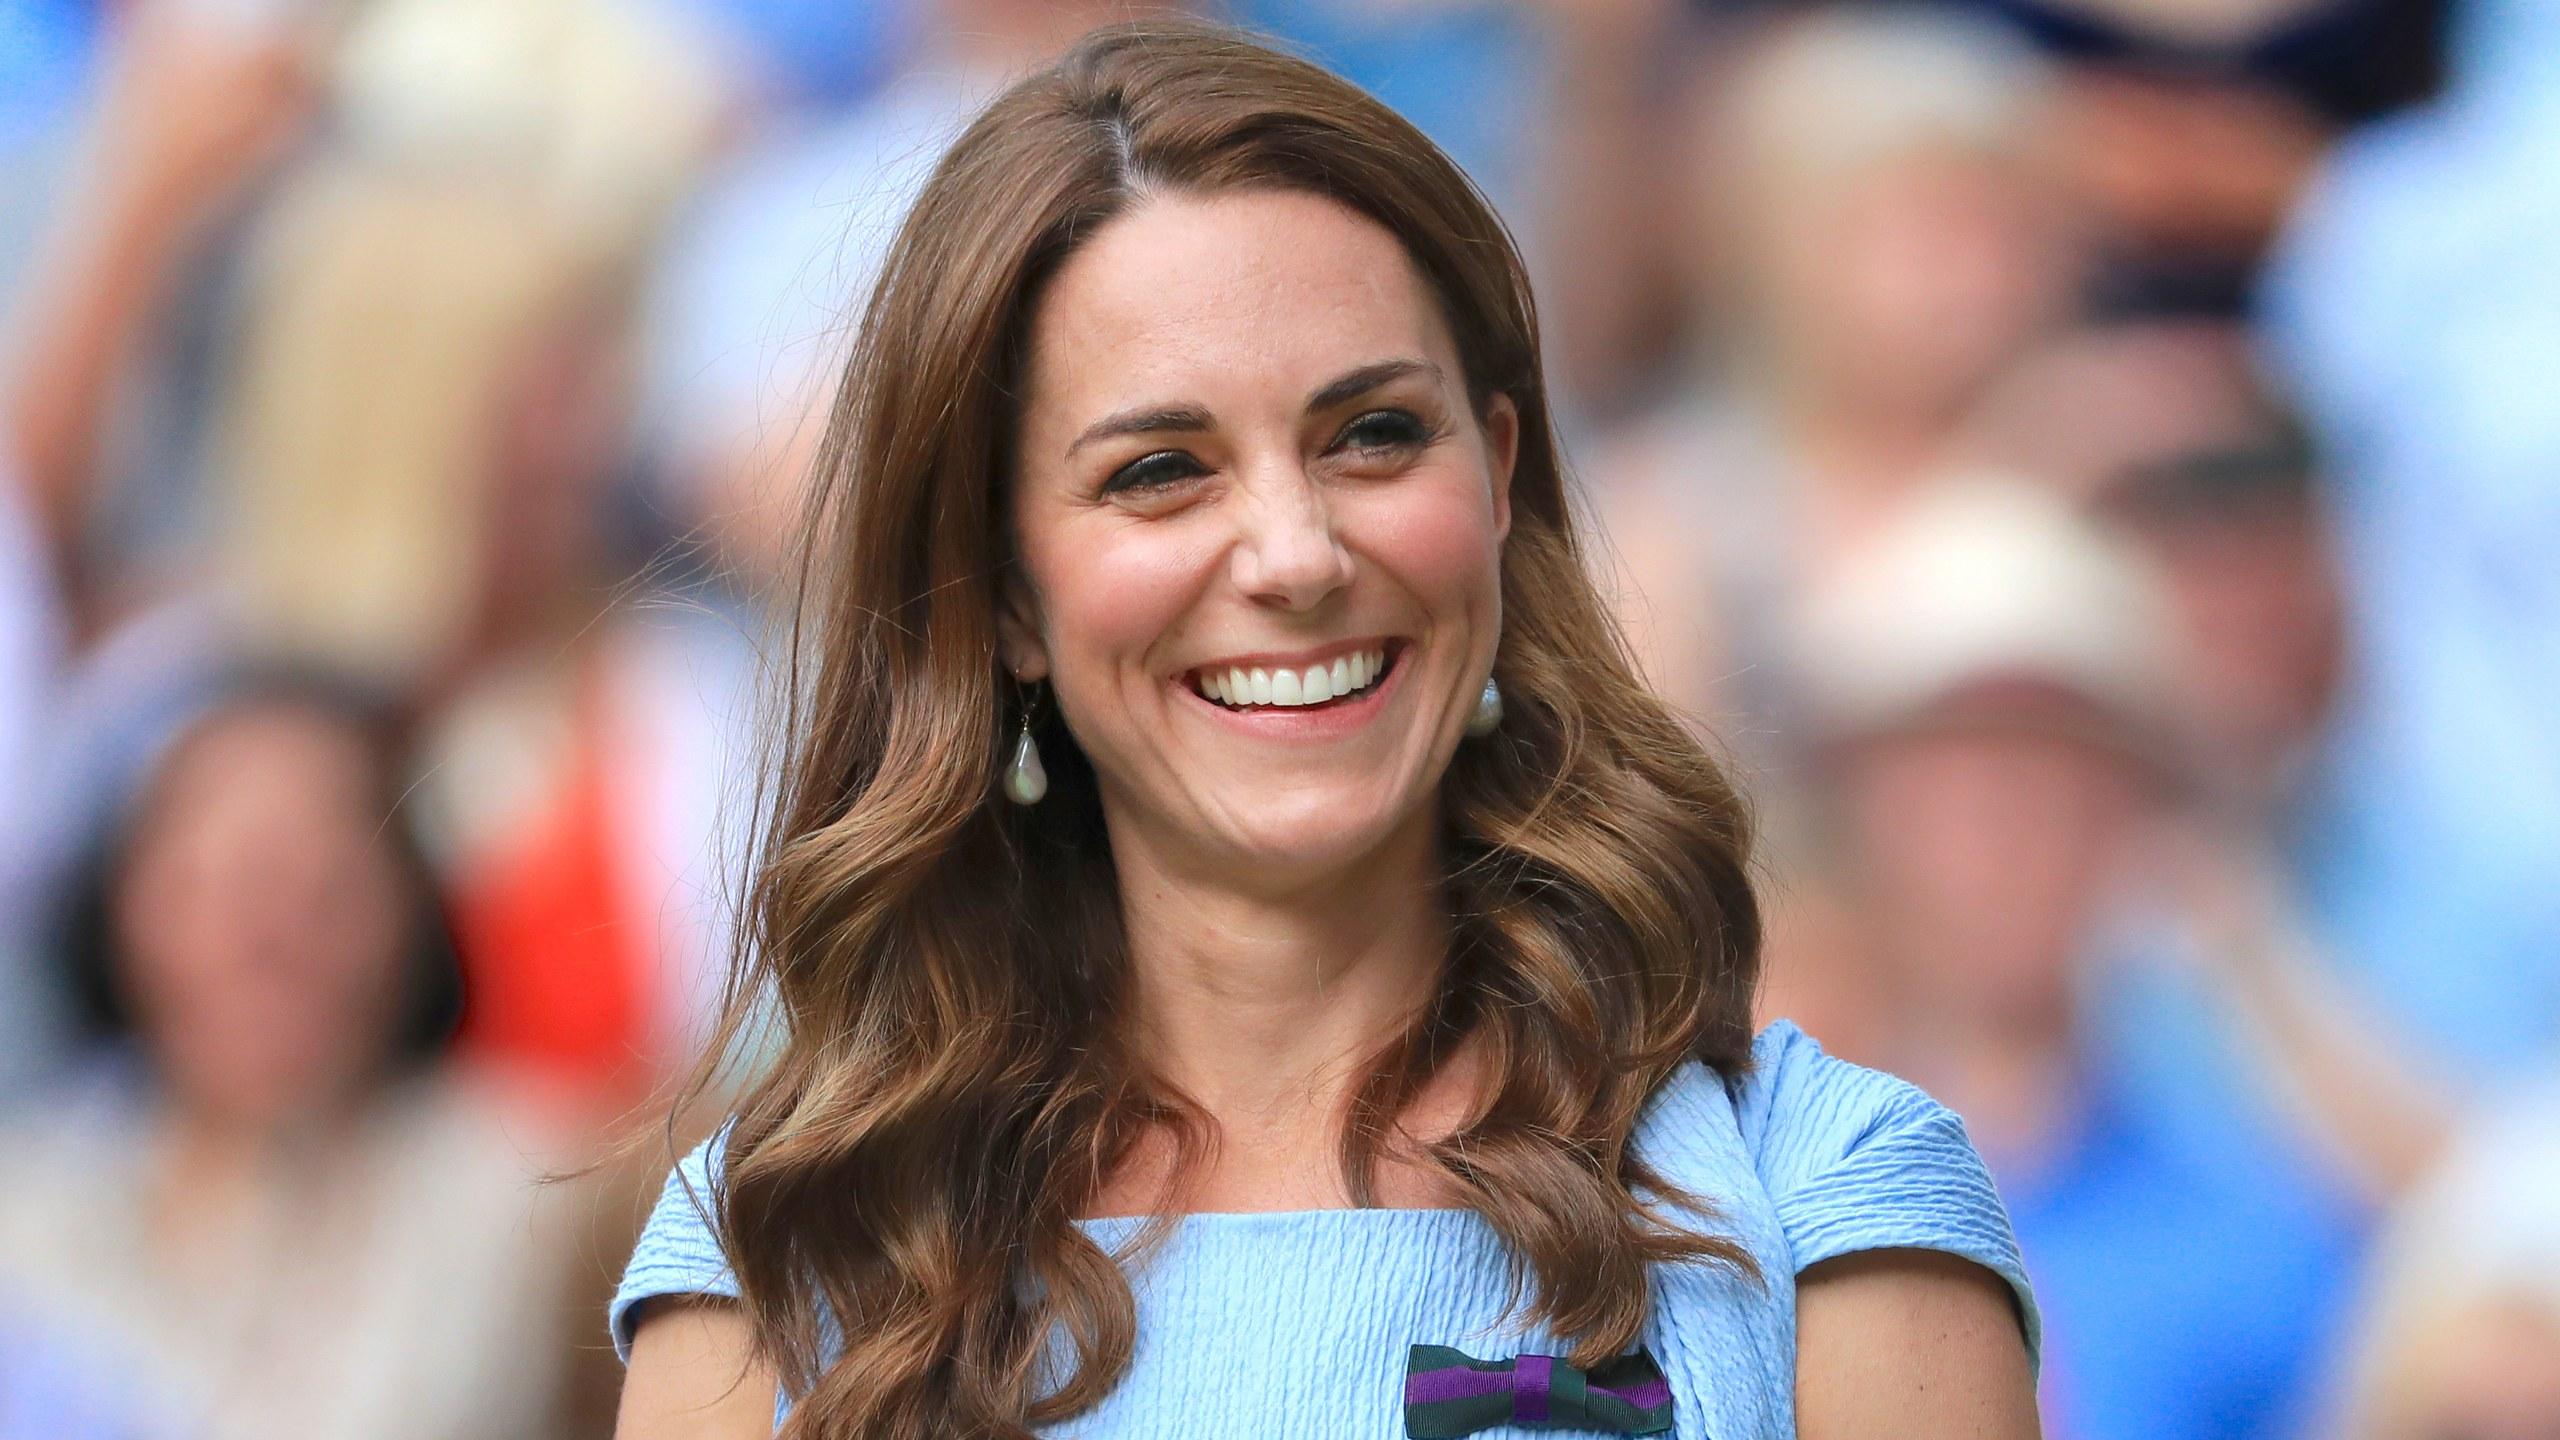 The Palace Just Denied That Kate Middleton Got Botox